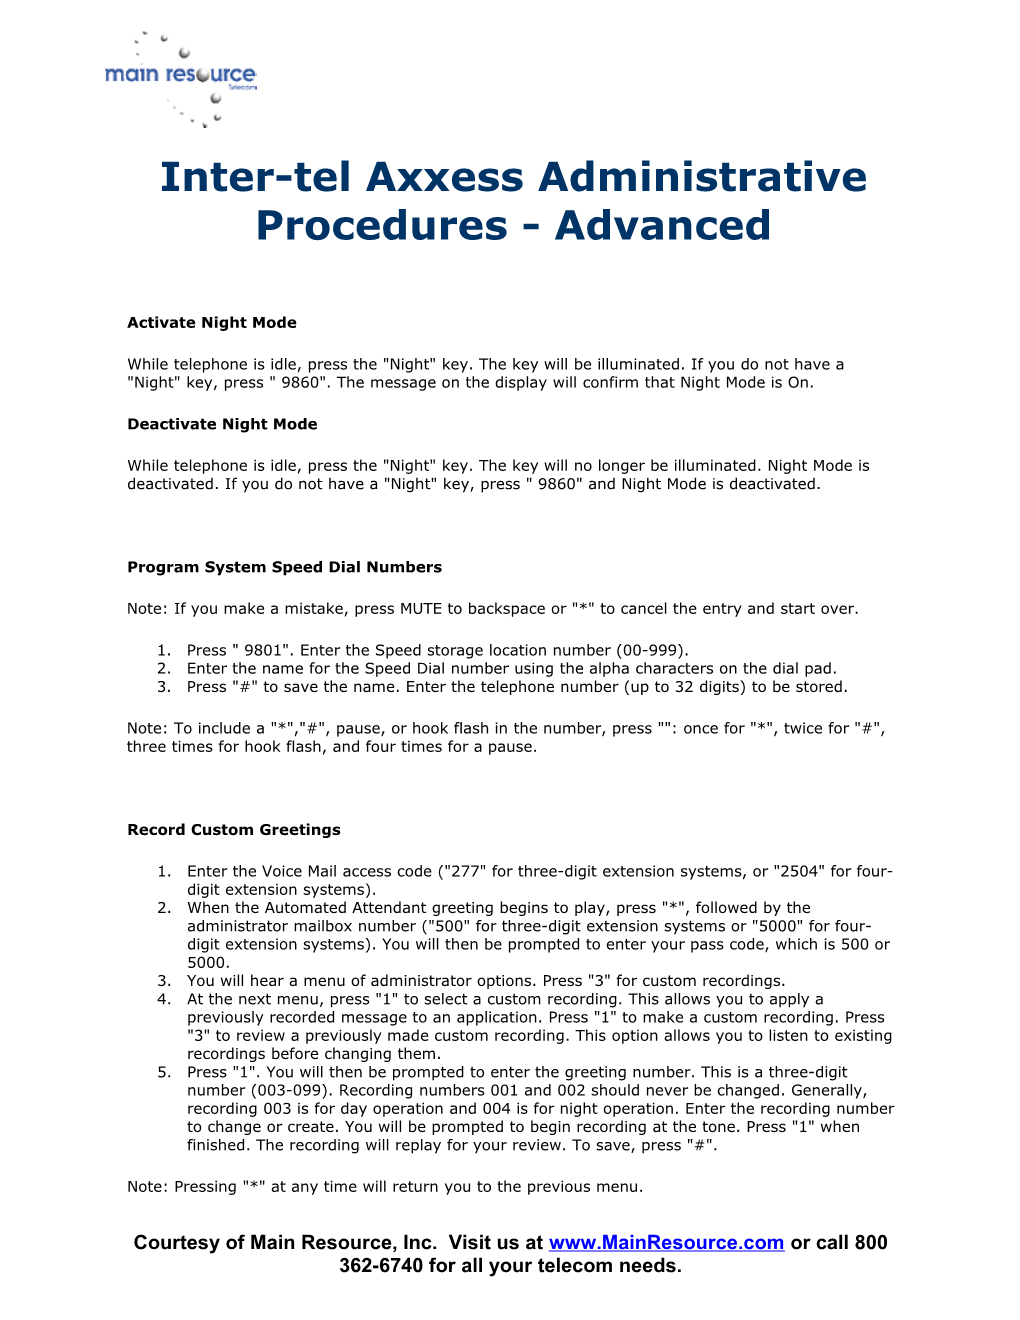 Inter-Tel Axxess Administrative Procedures - Advanced